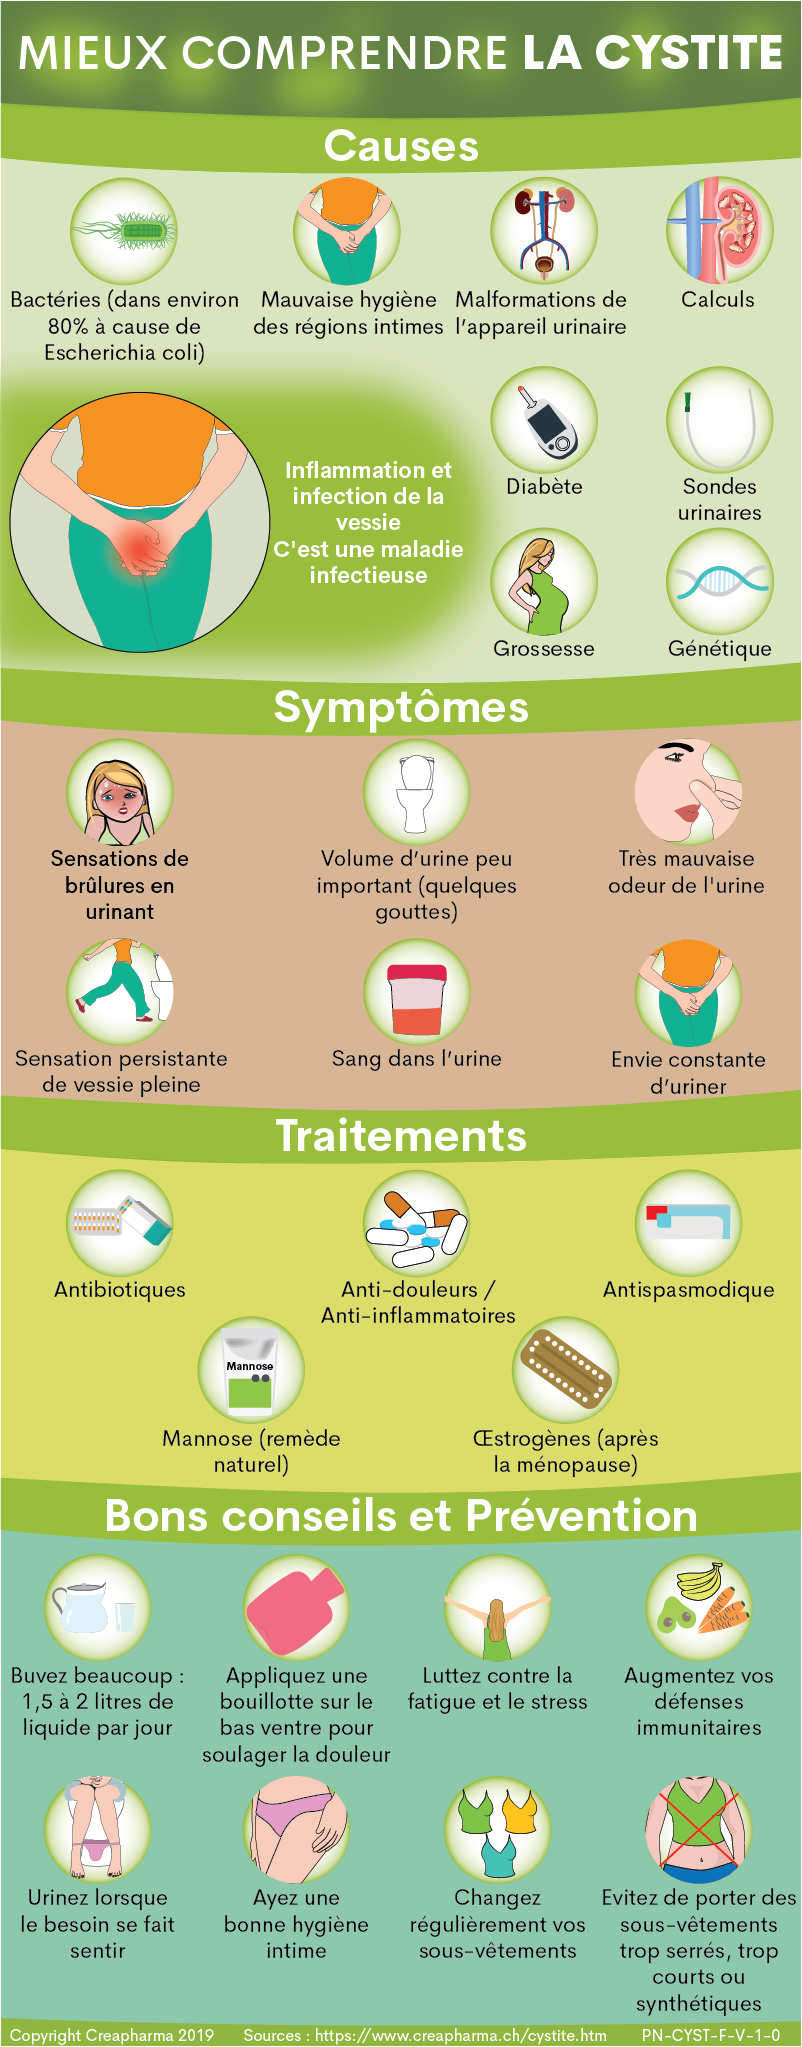 Cystite : causes, symptômes & traitements | Creapharma